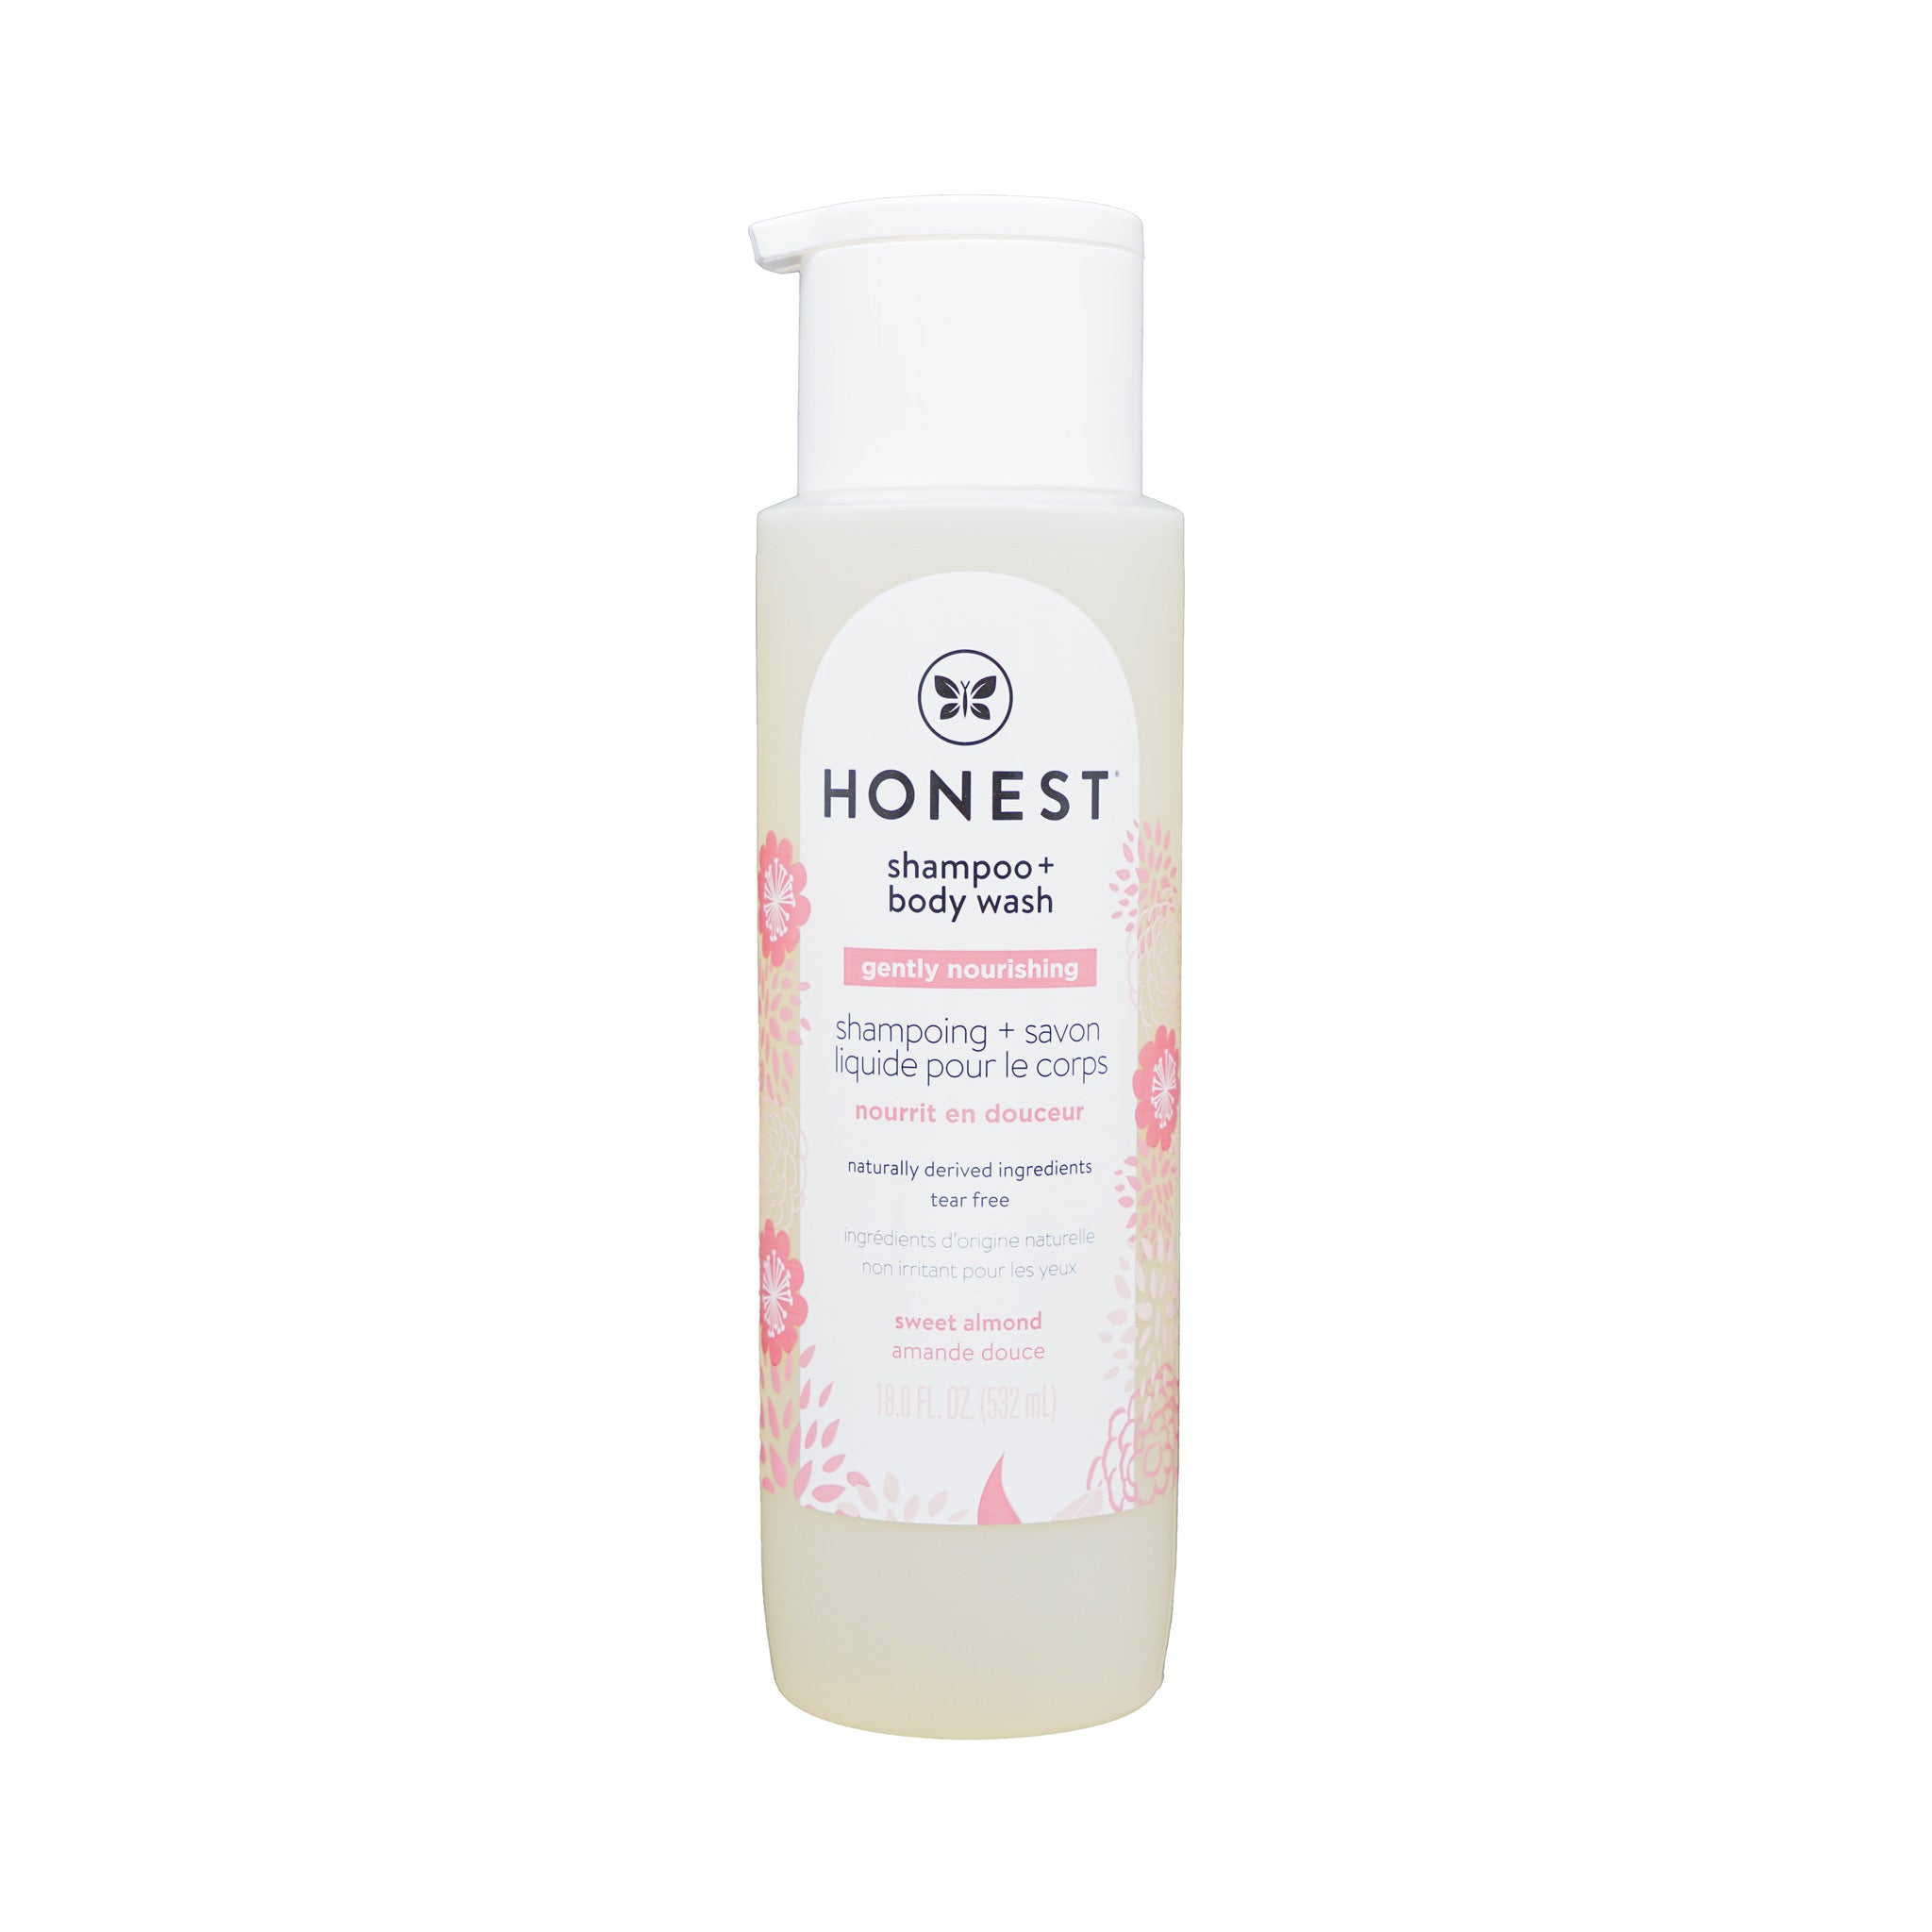 Honest Shampoo + Body Wash - Gently Nourishing 532mL